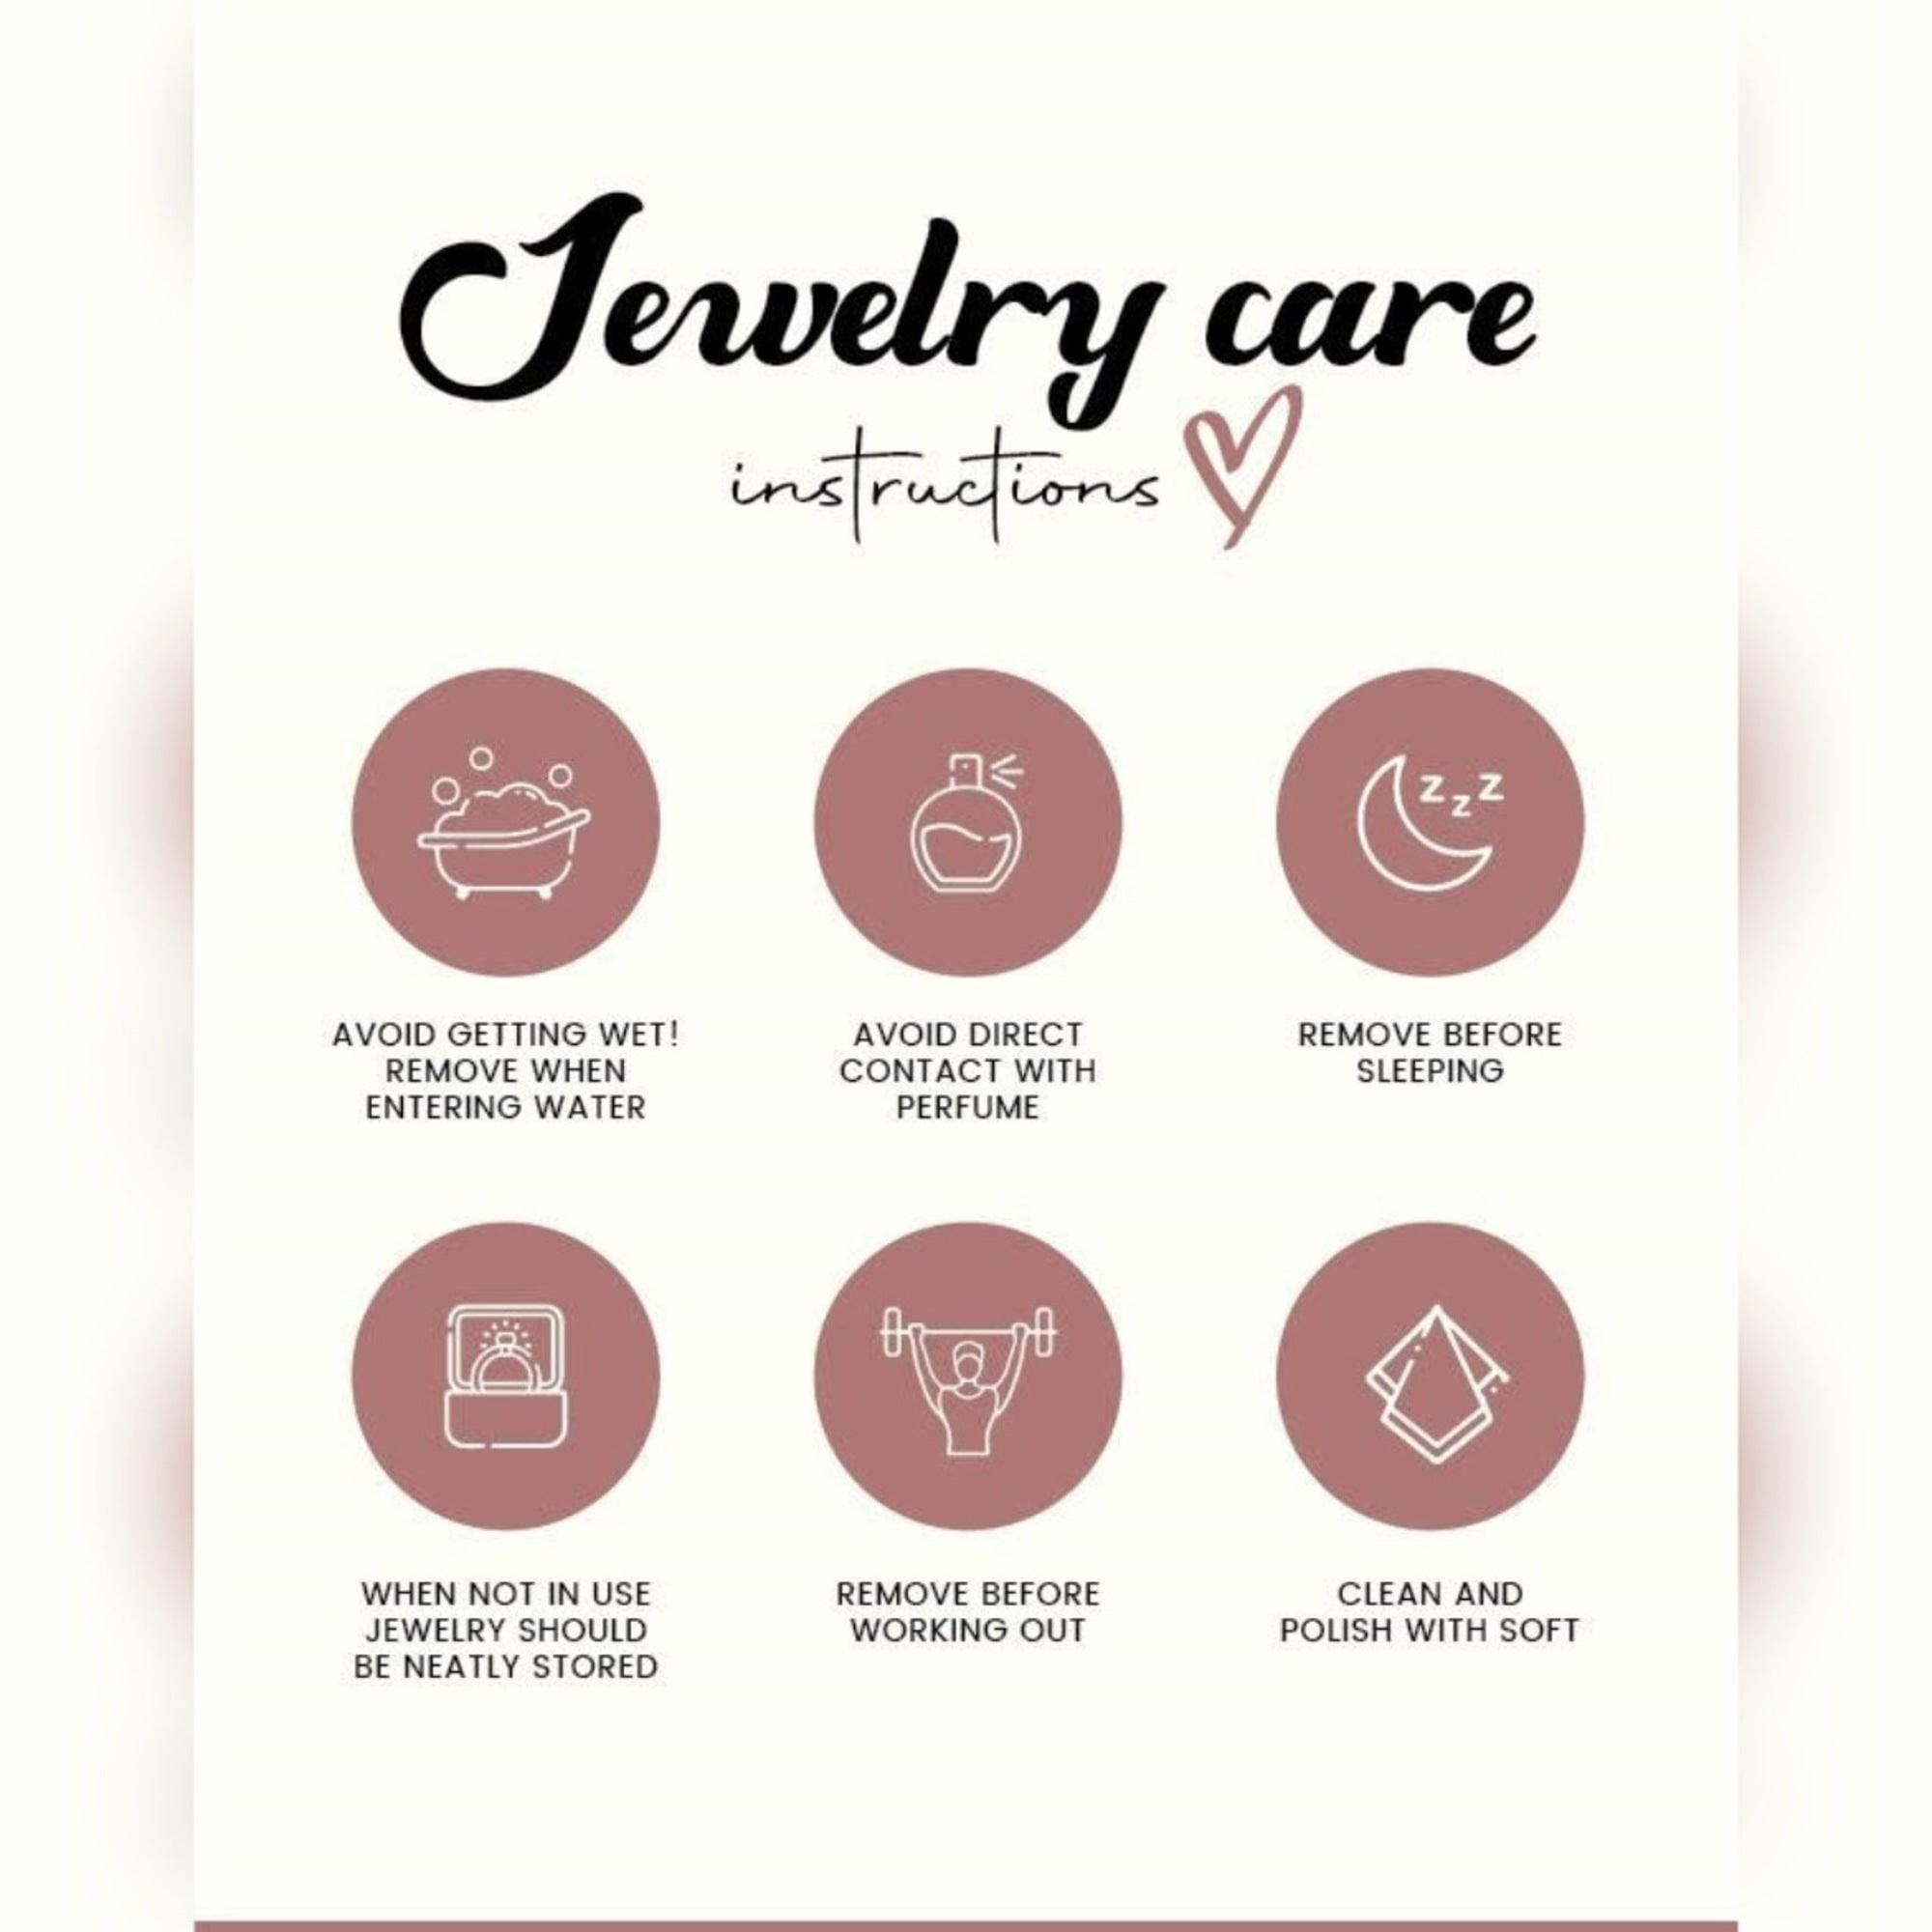 Garnet Natural Stone Beads | Gemstone Healing Crystal | Raw Gemstone for Jewelry making | Unique Stone Beads Gemstone SB-14 - Silverhubjewels